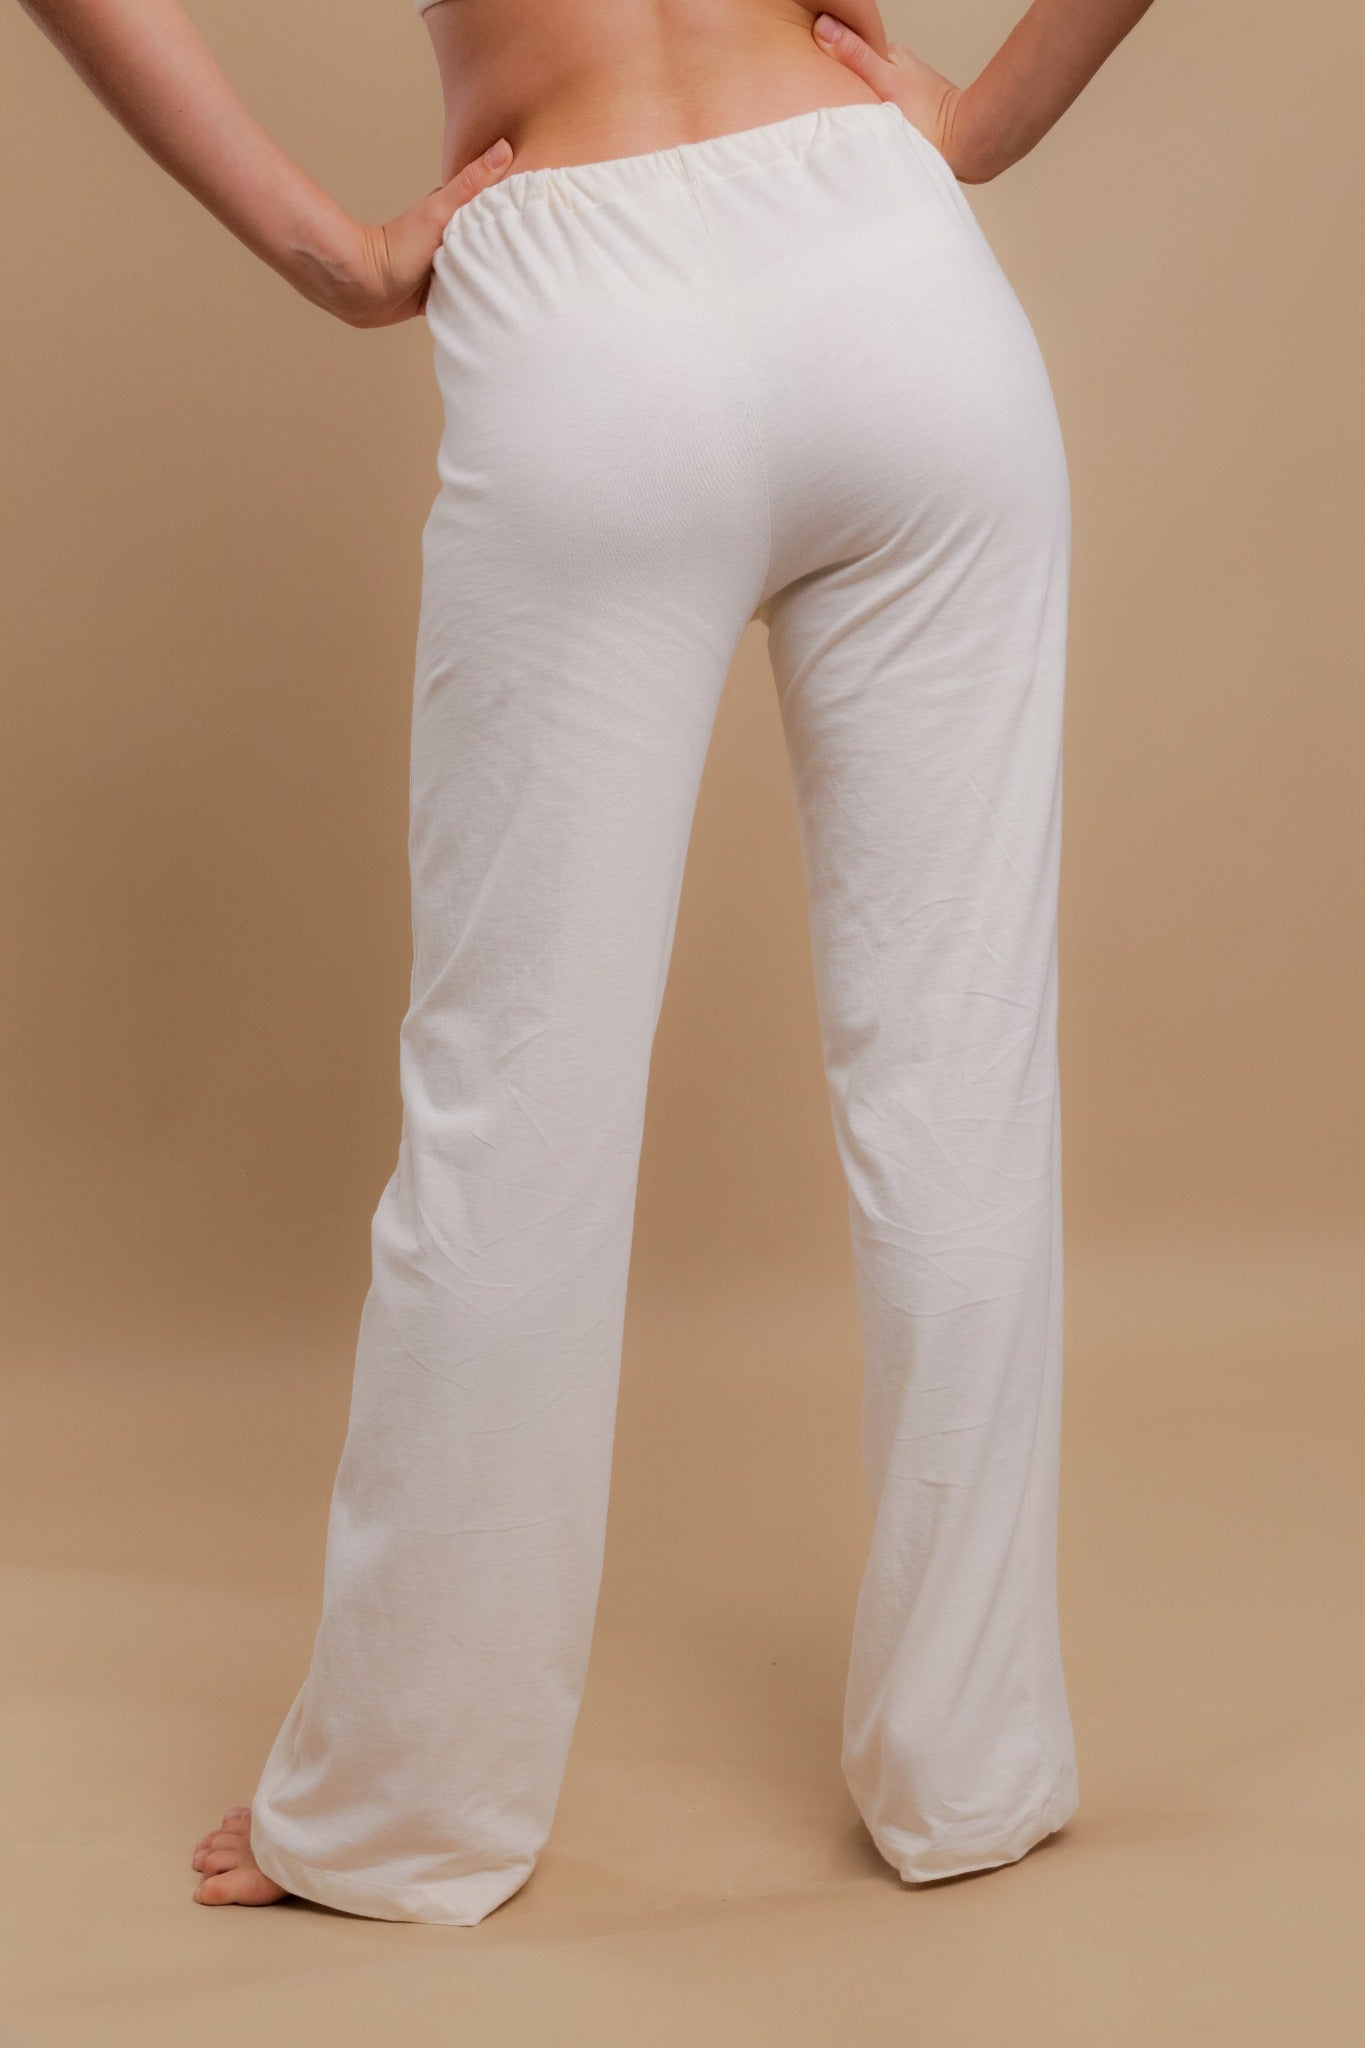 Organic Cotton Women's Drawstring Pants with Patch Pockets (Melange Blue) –  Cottonique - Allergy-free Apparel